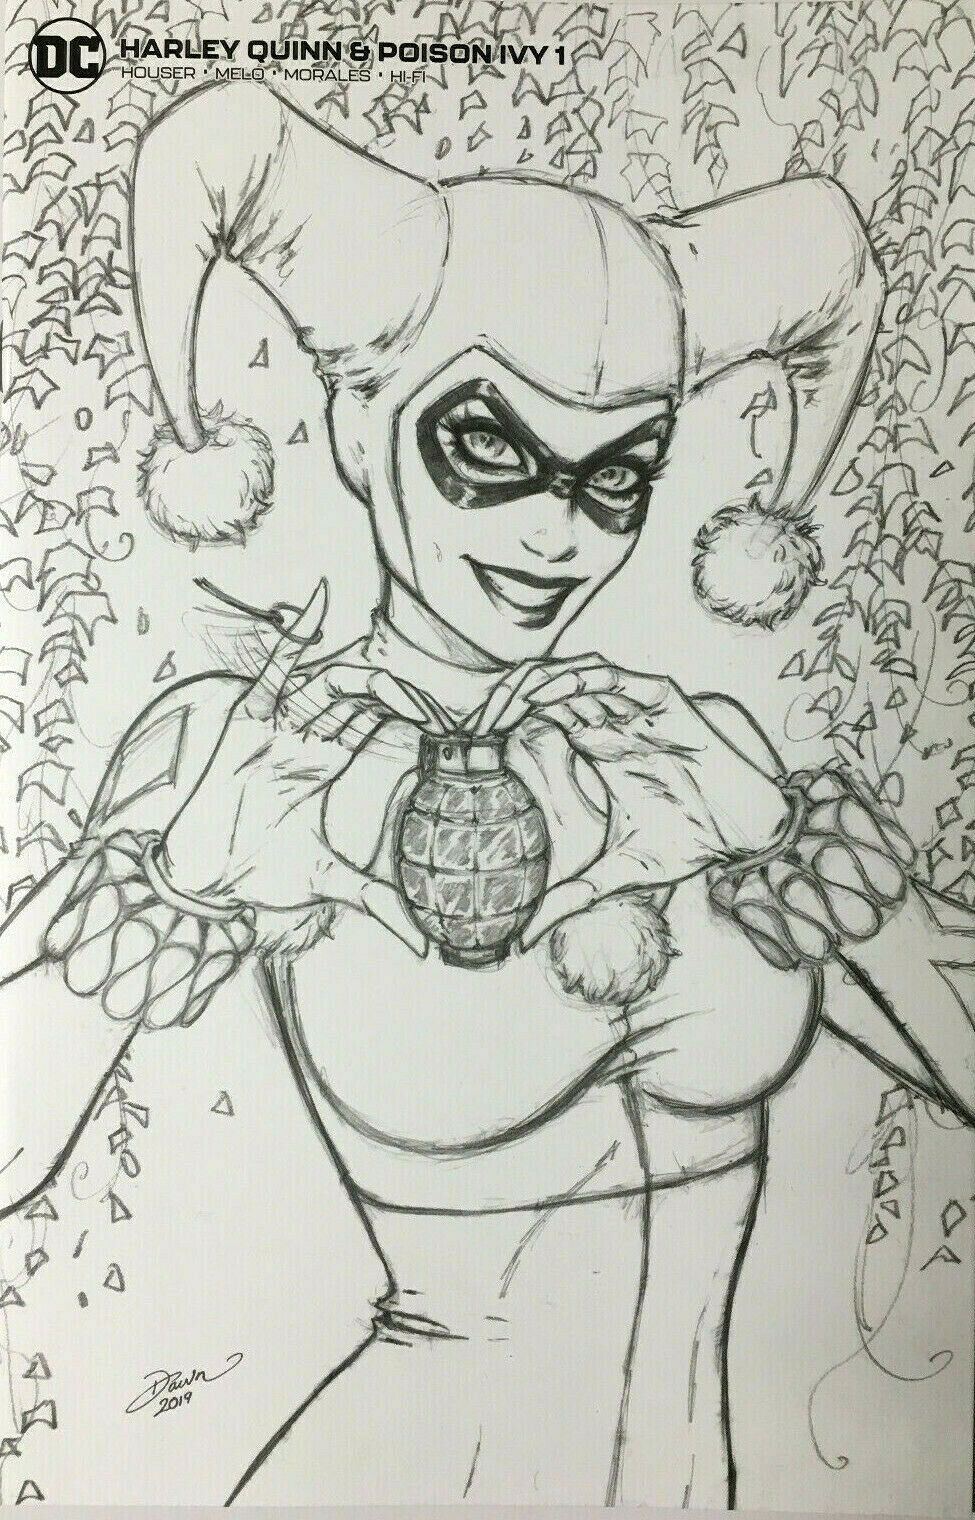 Harley Quinn & Poison Ivy #1 Exclusive Dawn McTeigue Sketch Variant